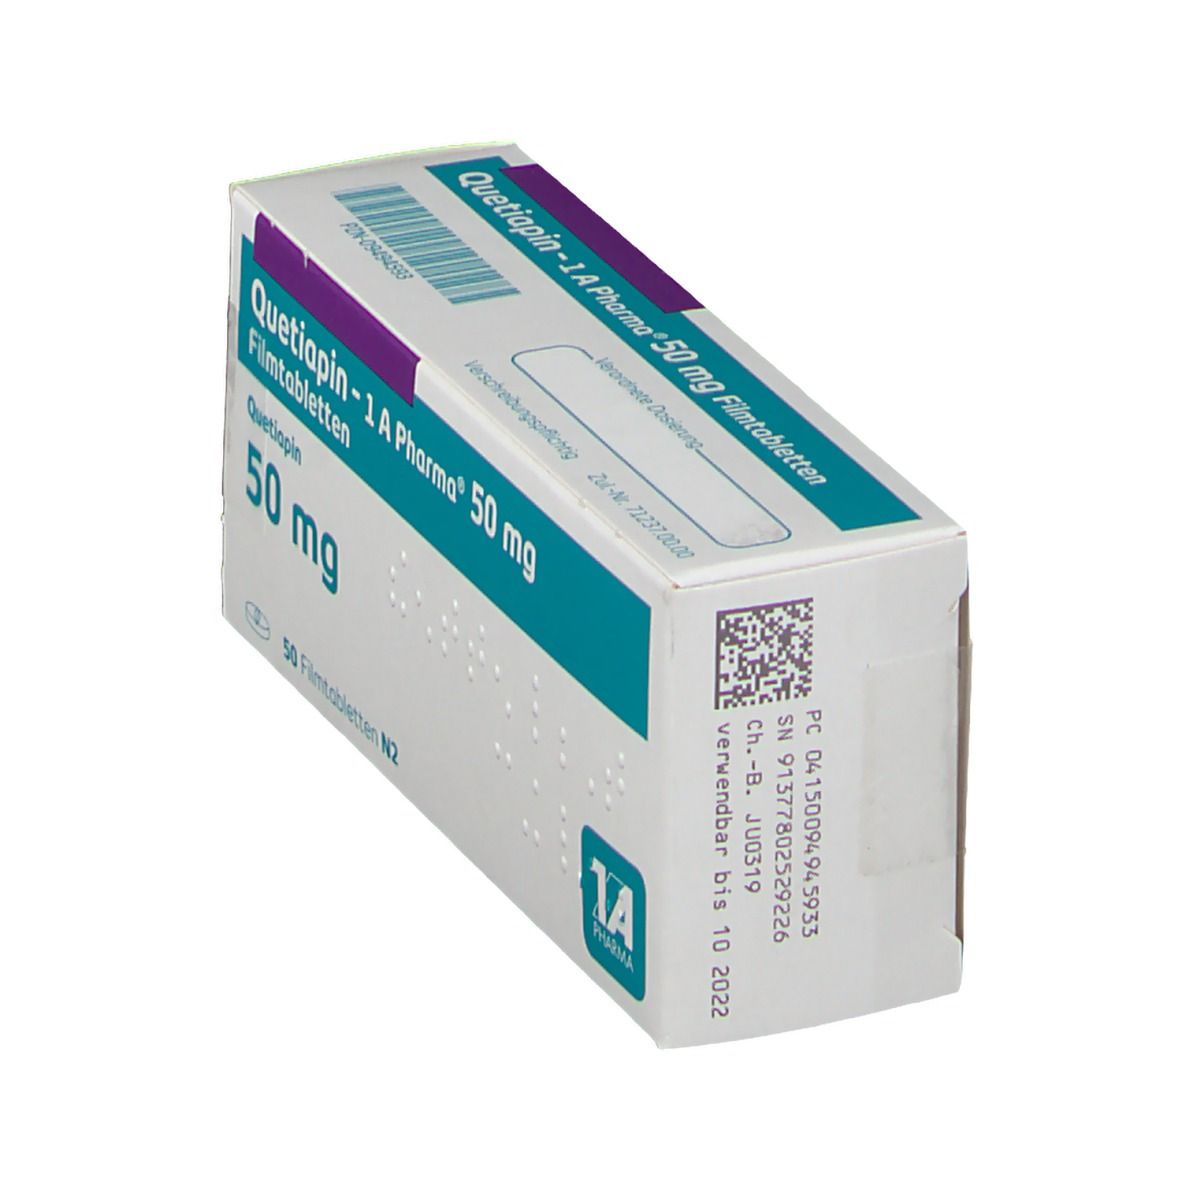 Quetiapin 1A Pharma® 50Mg